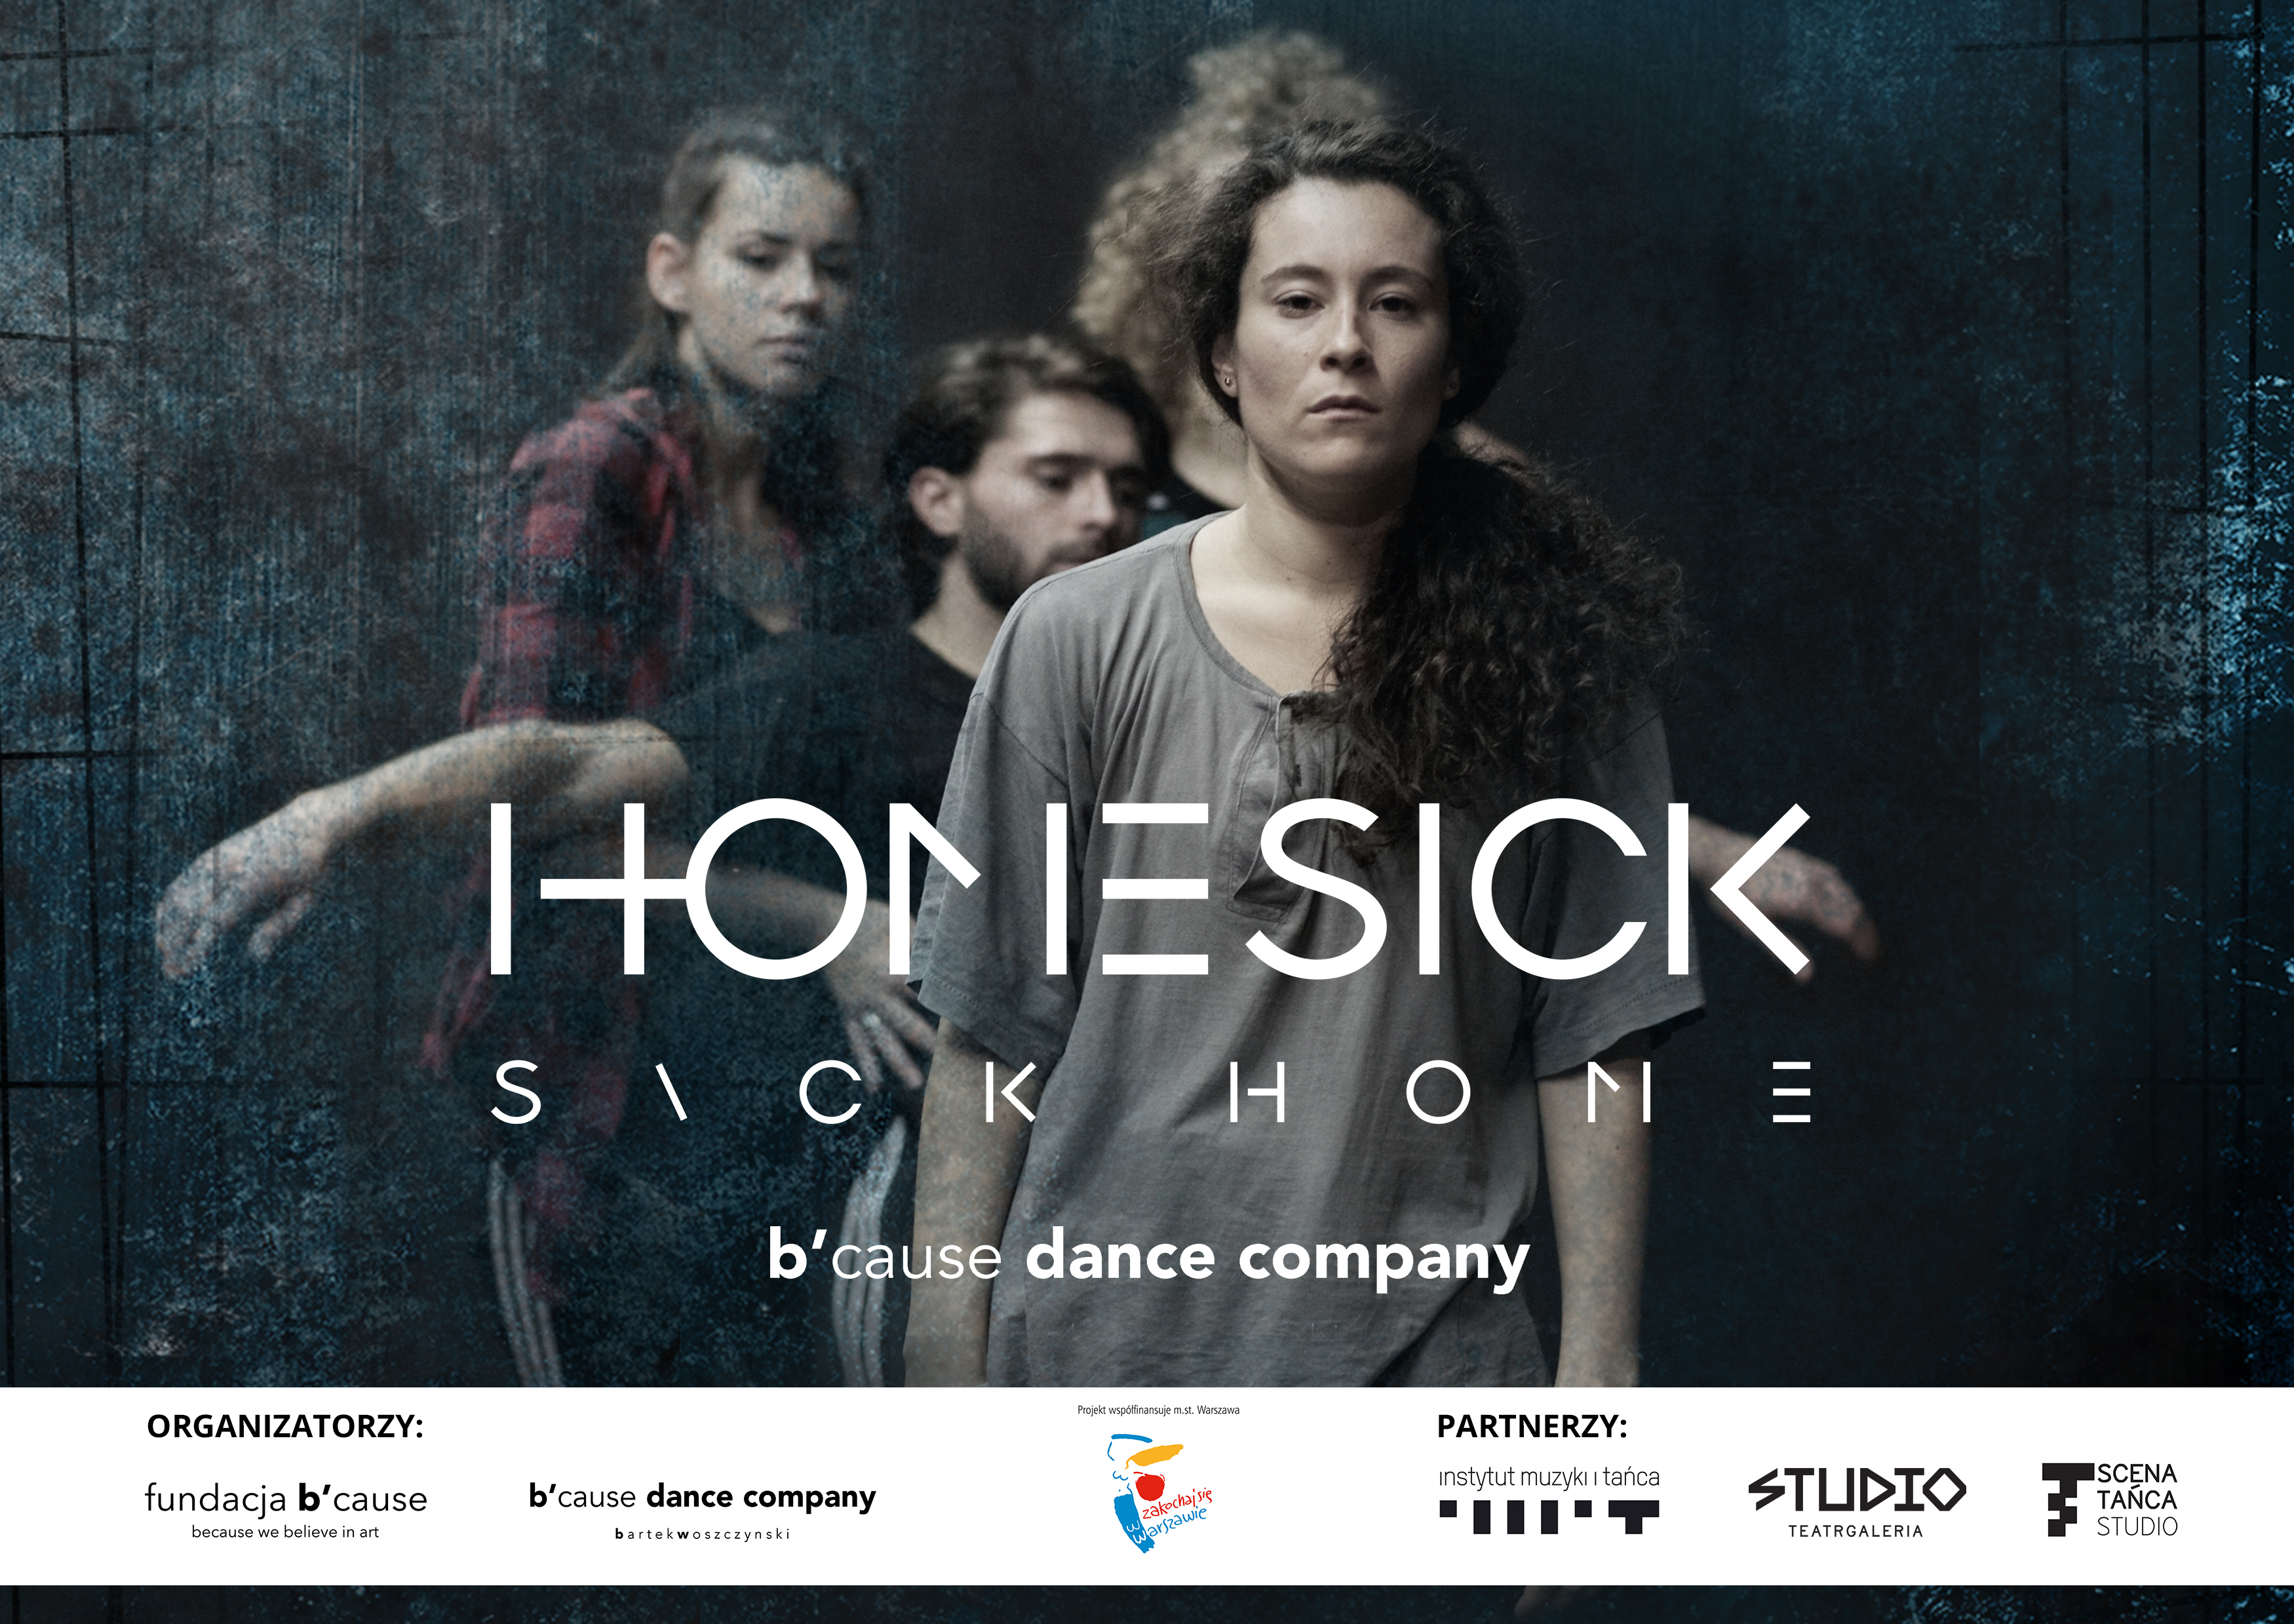 Homesick - sick home 6